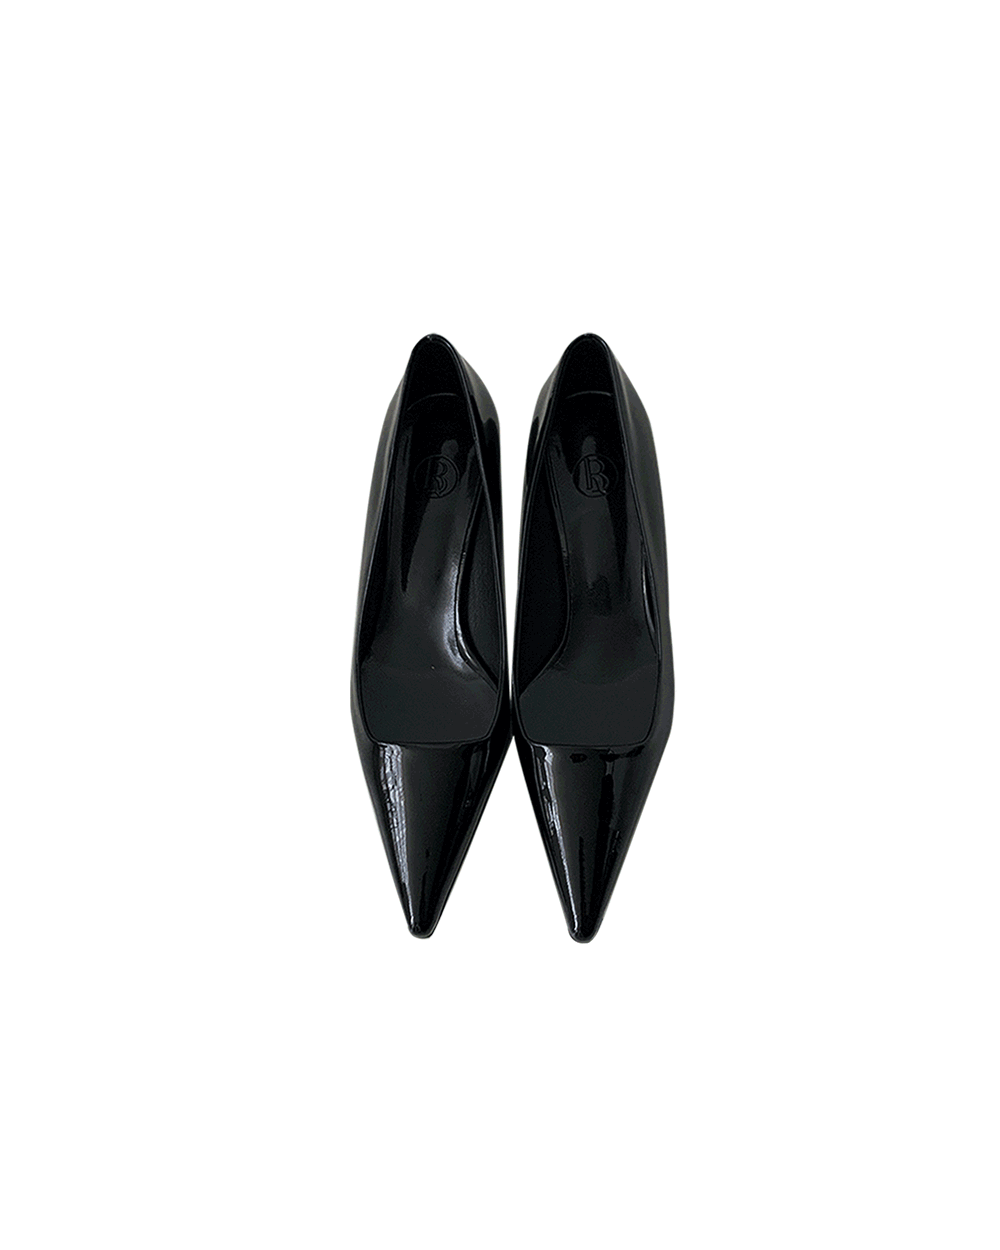 23fw B classic stiletto heel